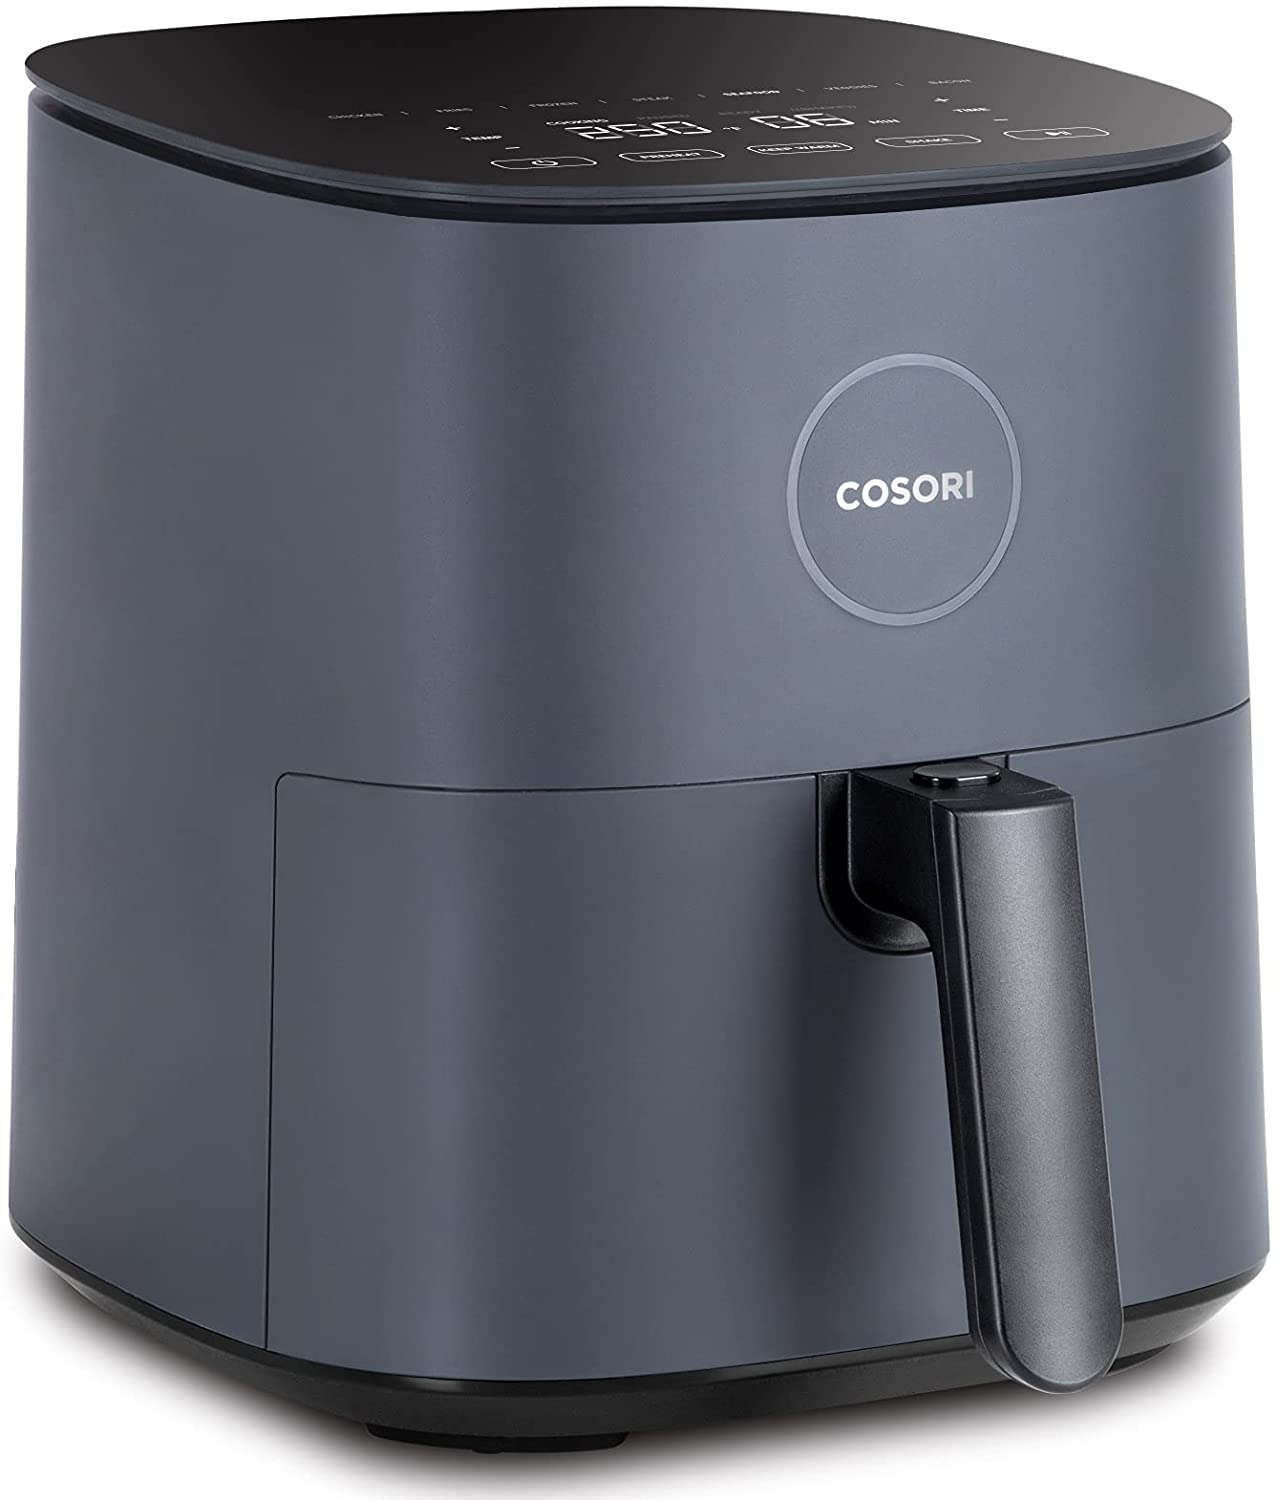 Cosori Oilless 5QT Air Fryer Oven $89.98